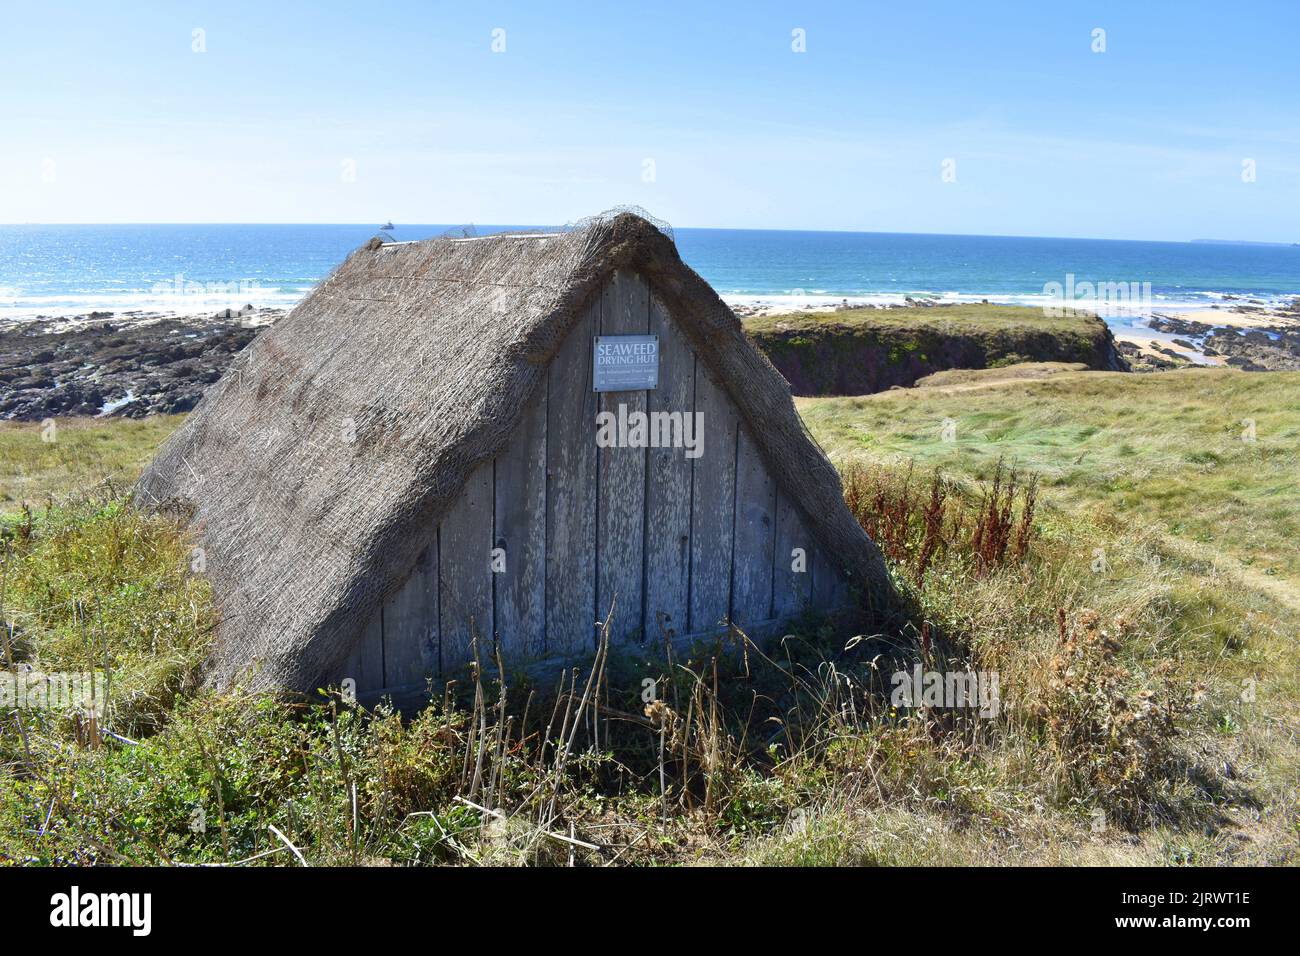 Seaweed drying hut, Freshwater West beach, Pembrokeshire, Wales Stock Photo